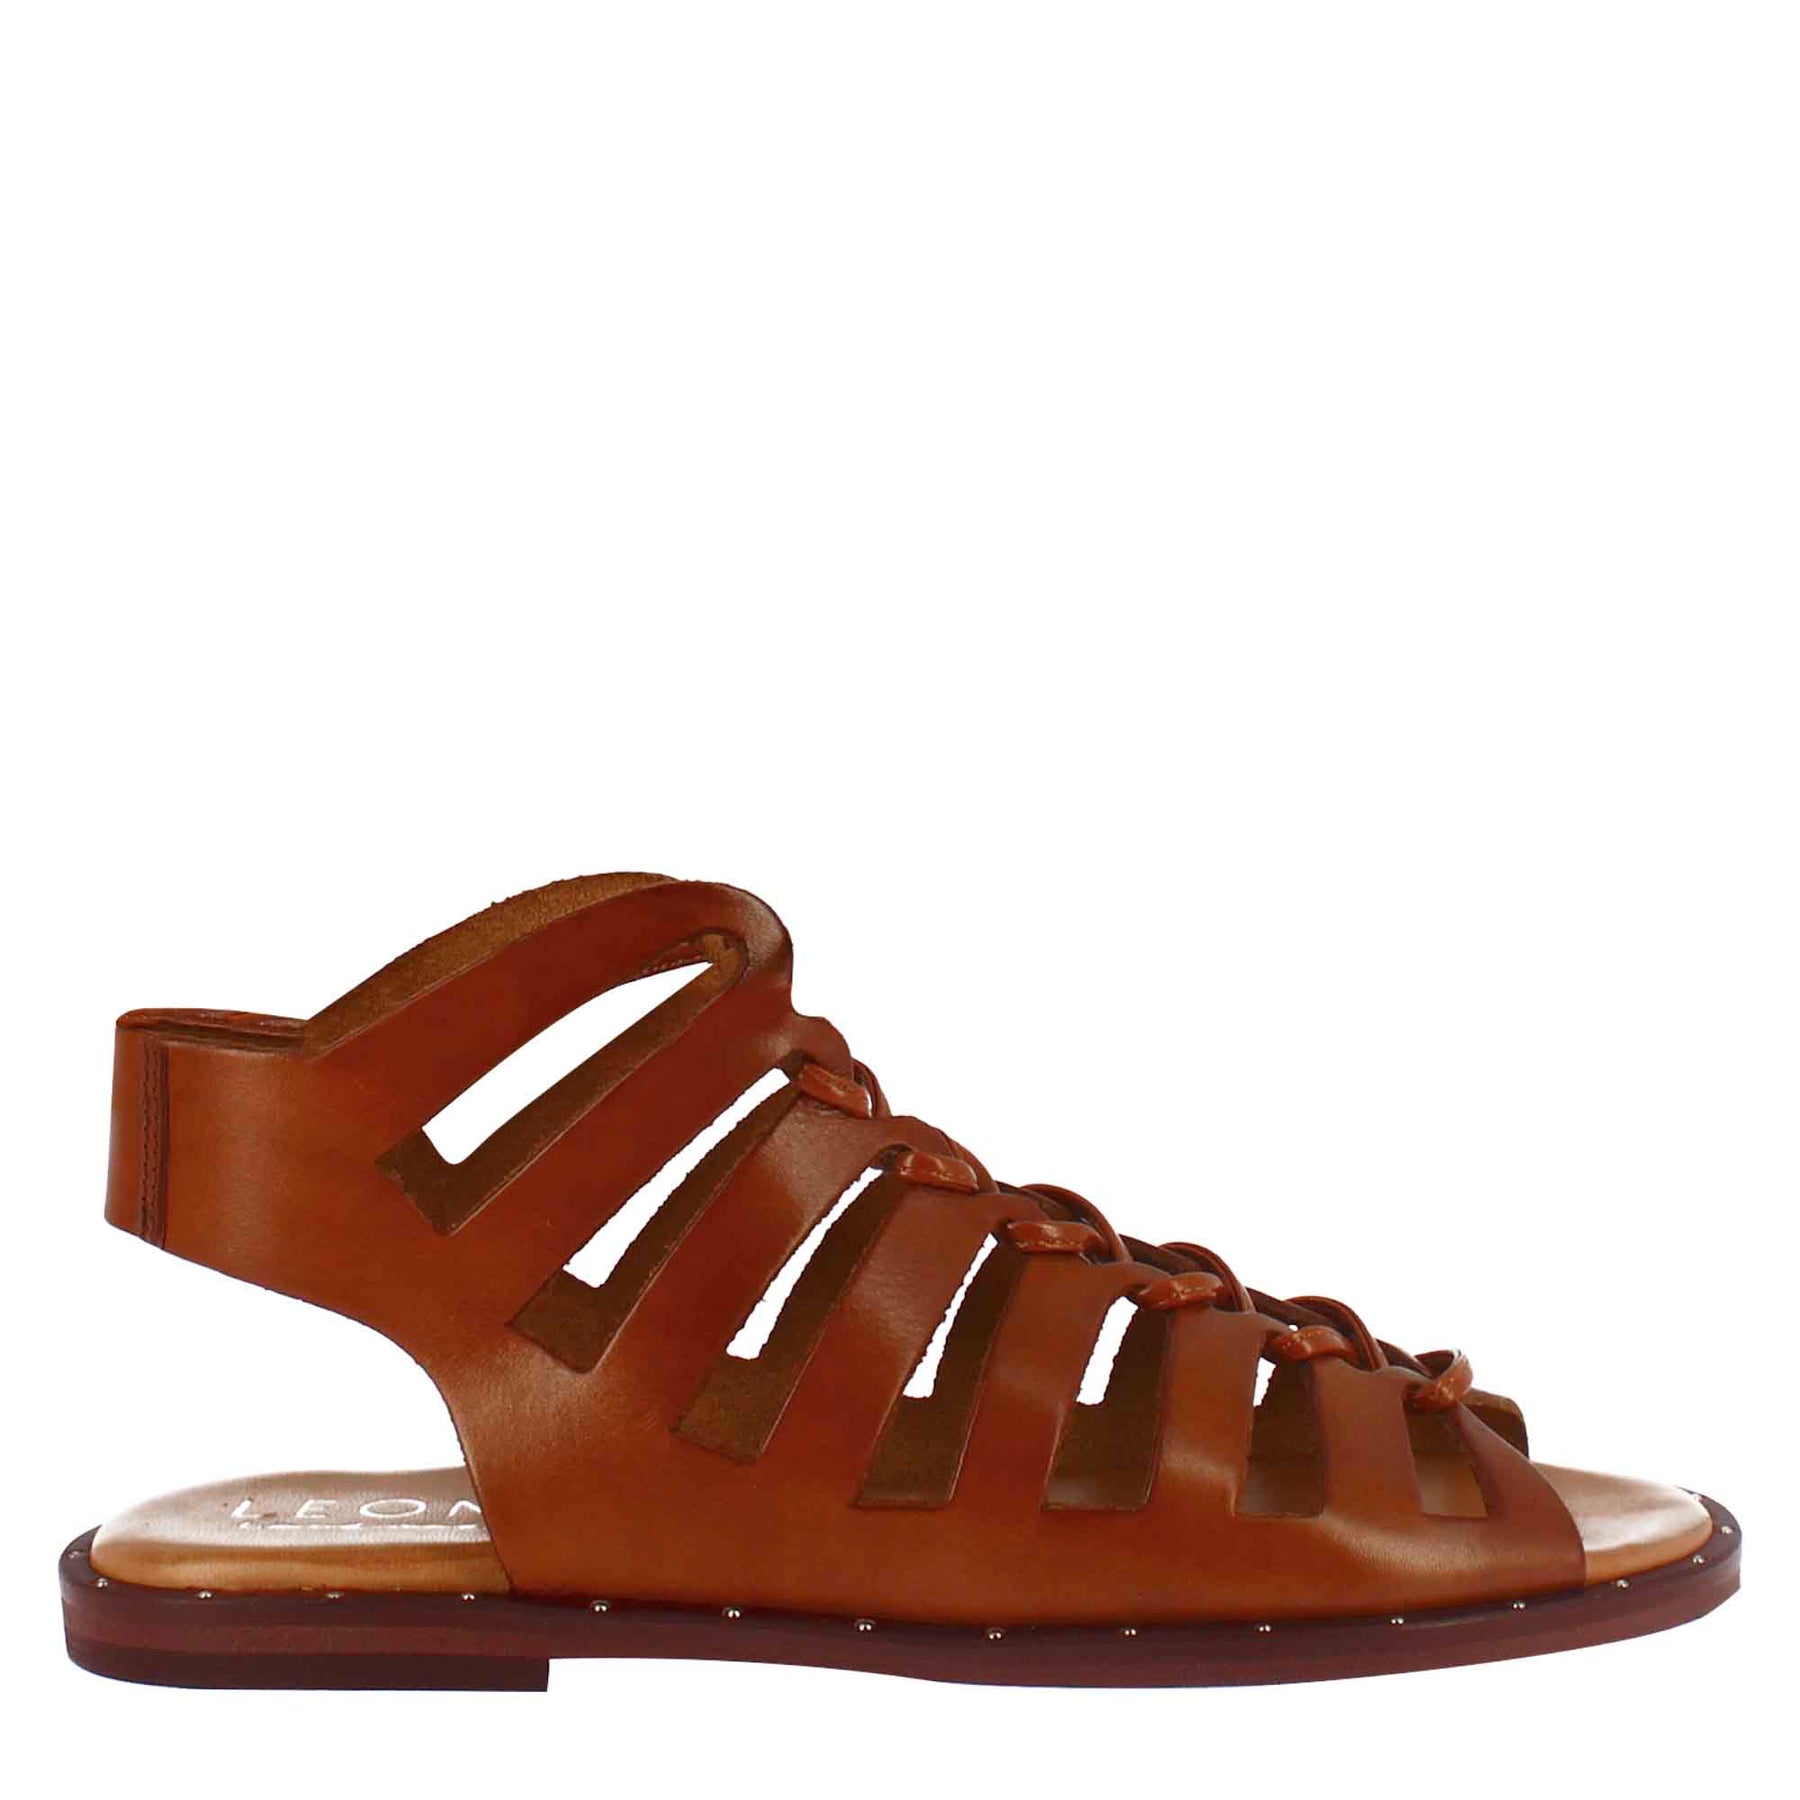 Shop Women's Gladiator Sandals